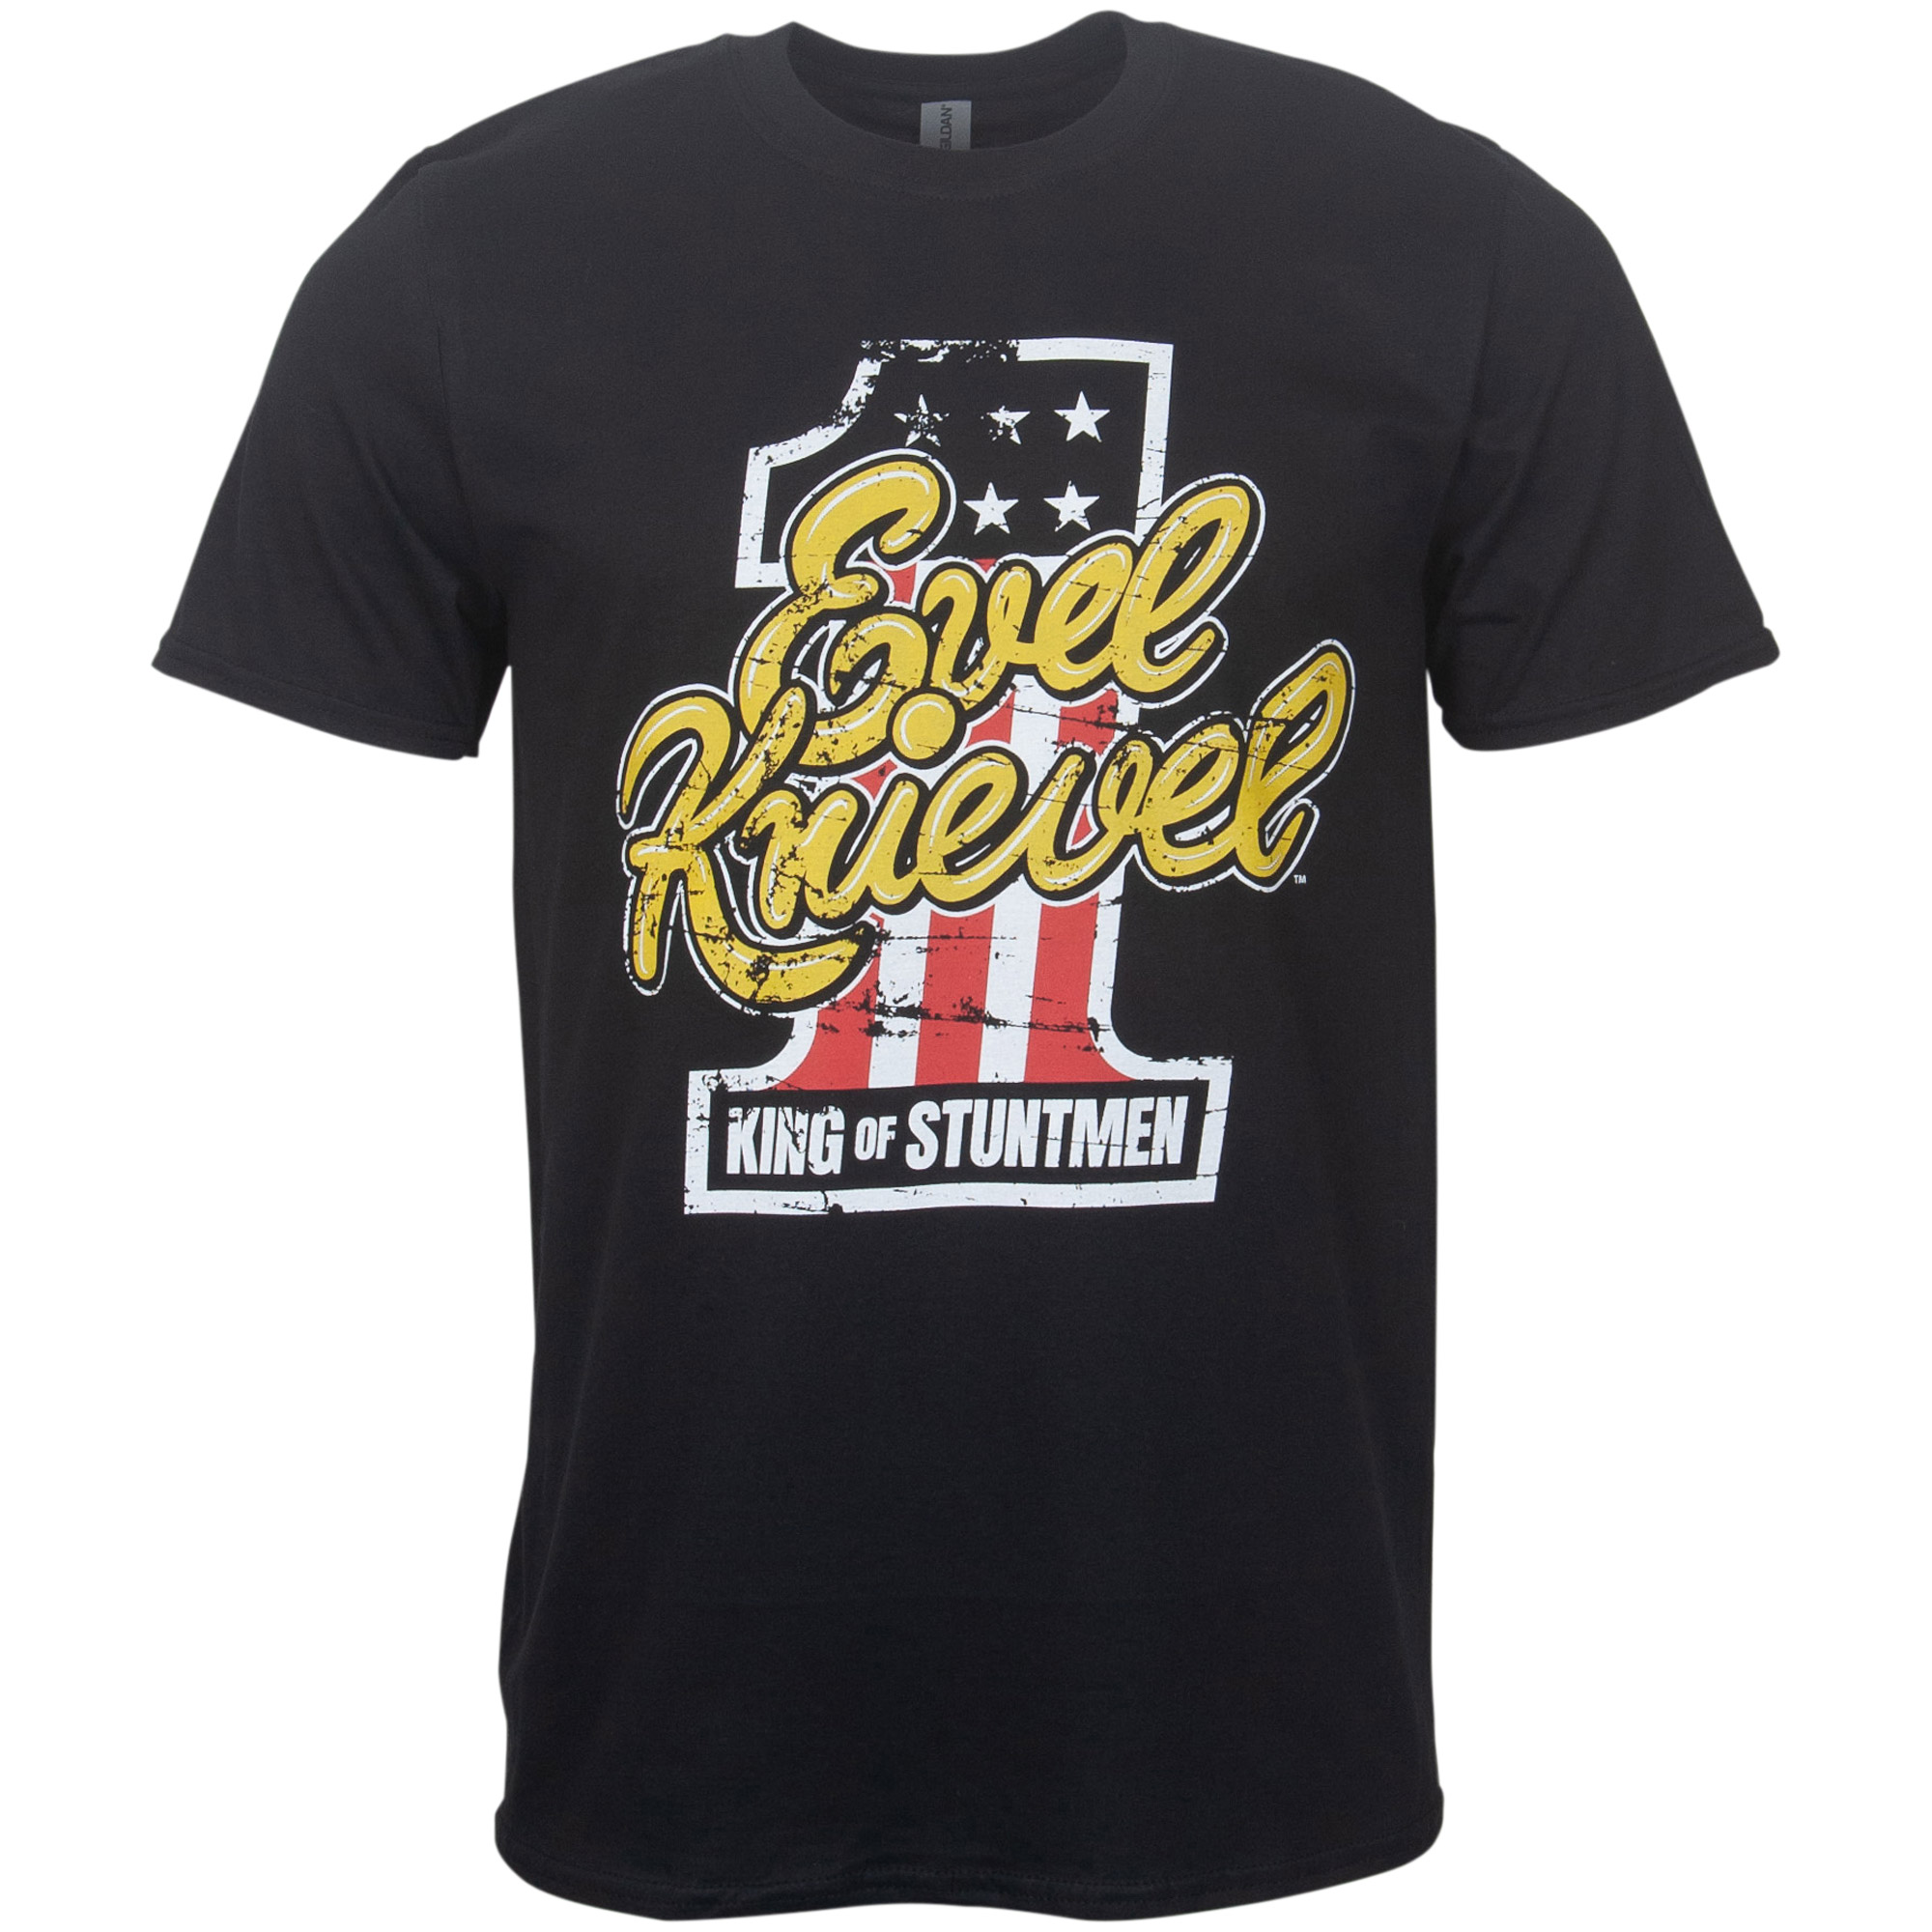 Evel Knievel t-shirt "King of Stuntmen" - black